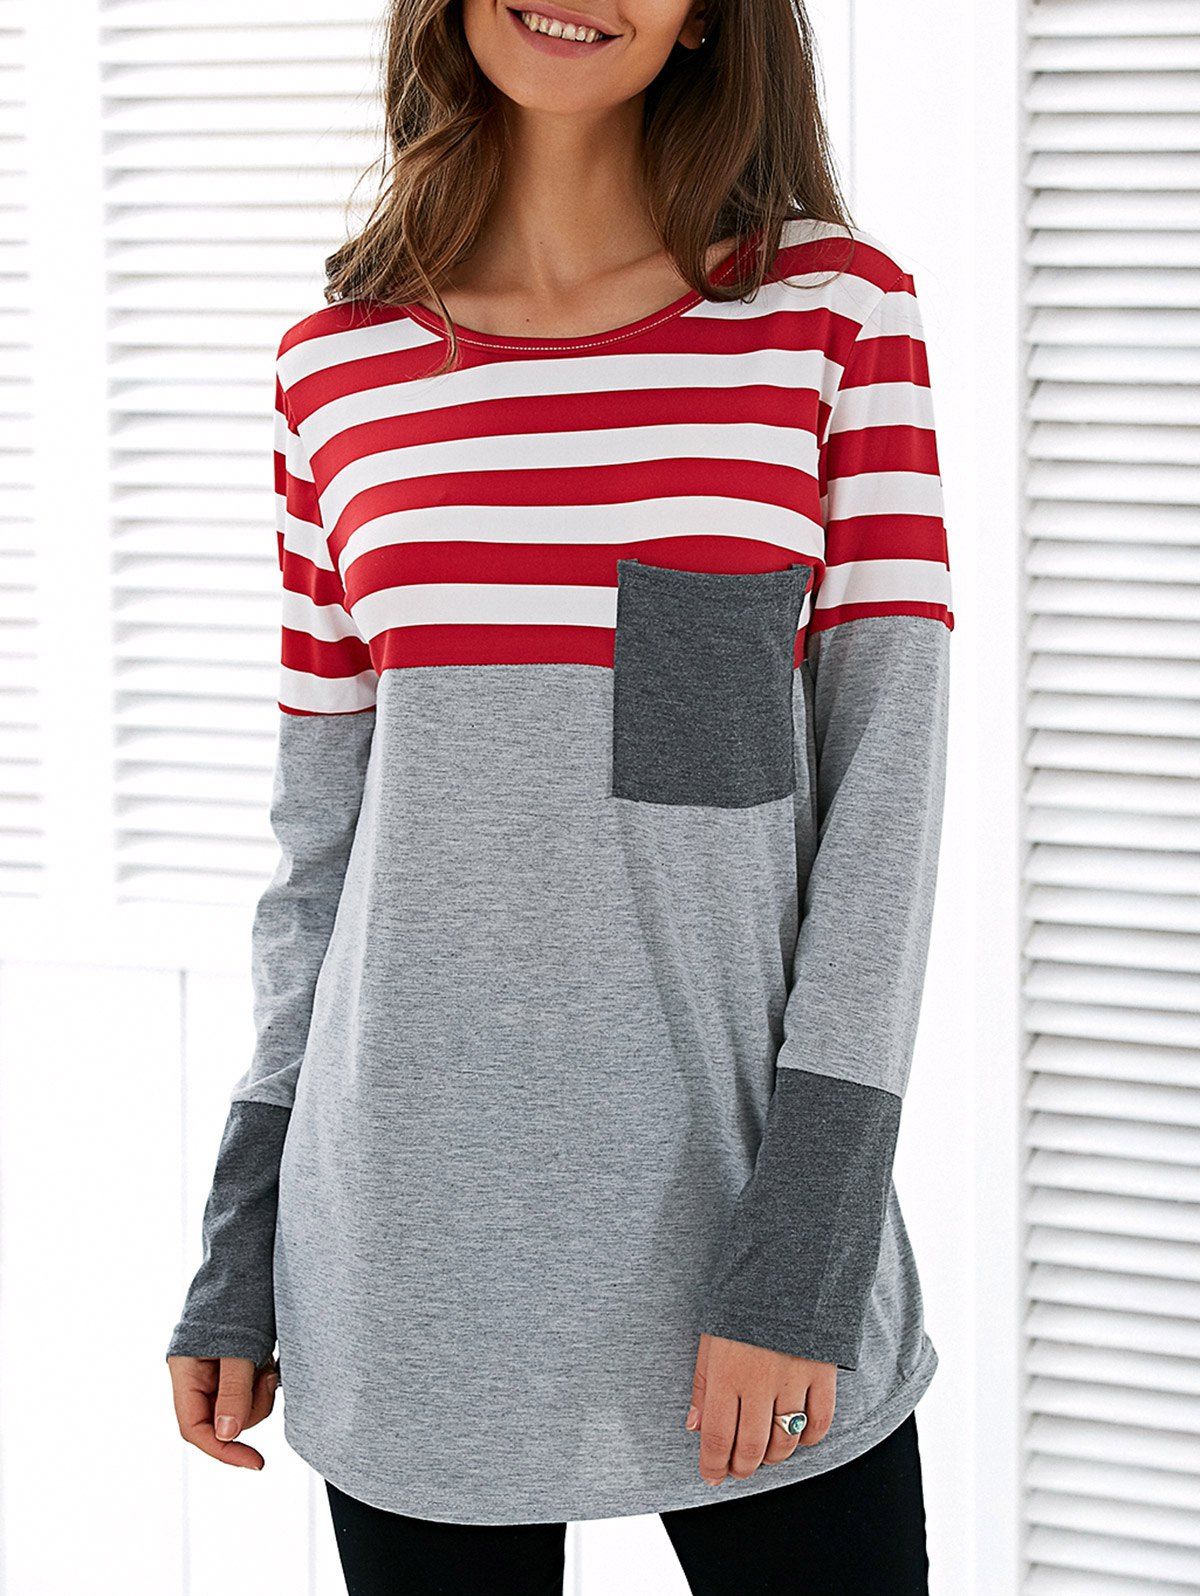 Patchwork Striped Long Sleeve Asymmetric T-Shirt - LIGHT GRAY XL